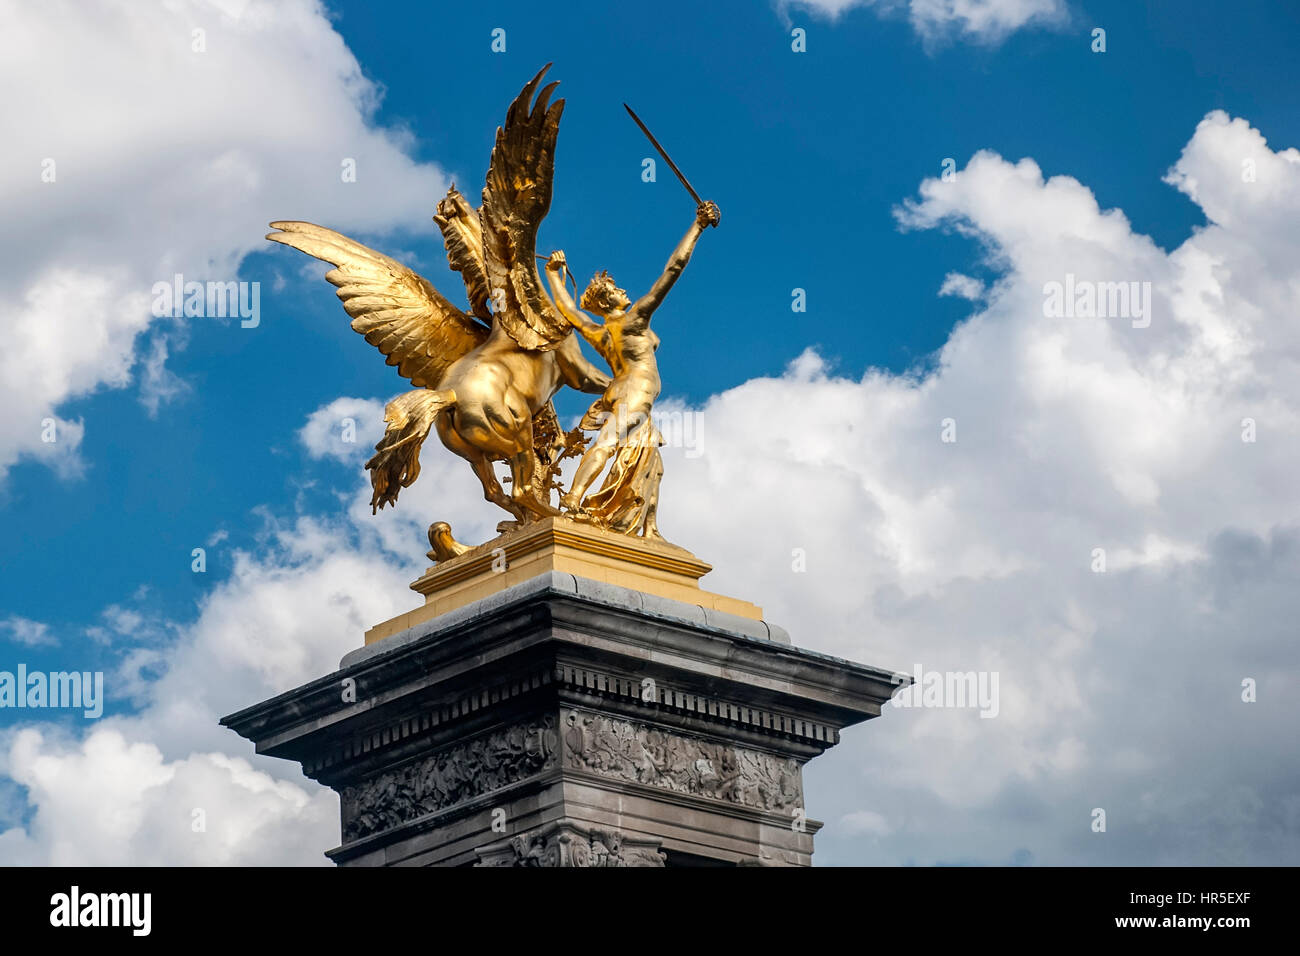 Pont Alexandre Iii Statue, Paris Stock Image - Image of 